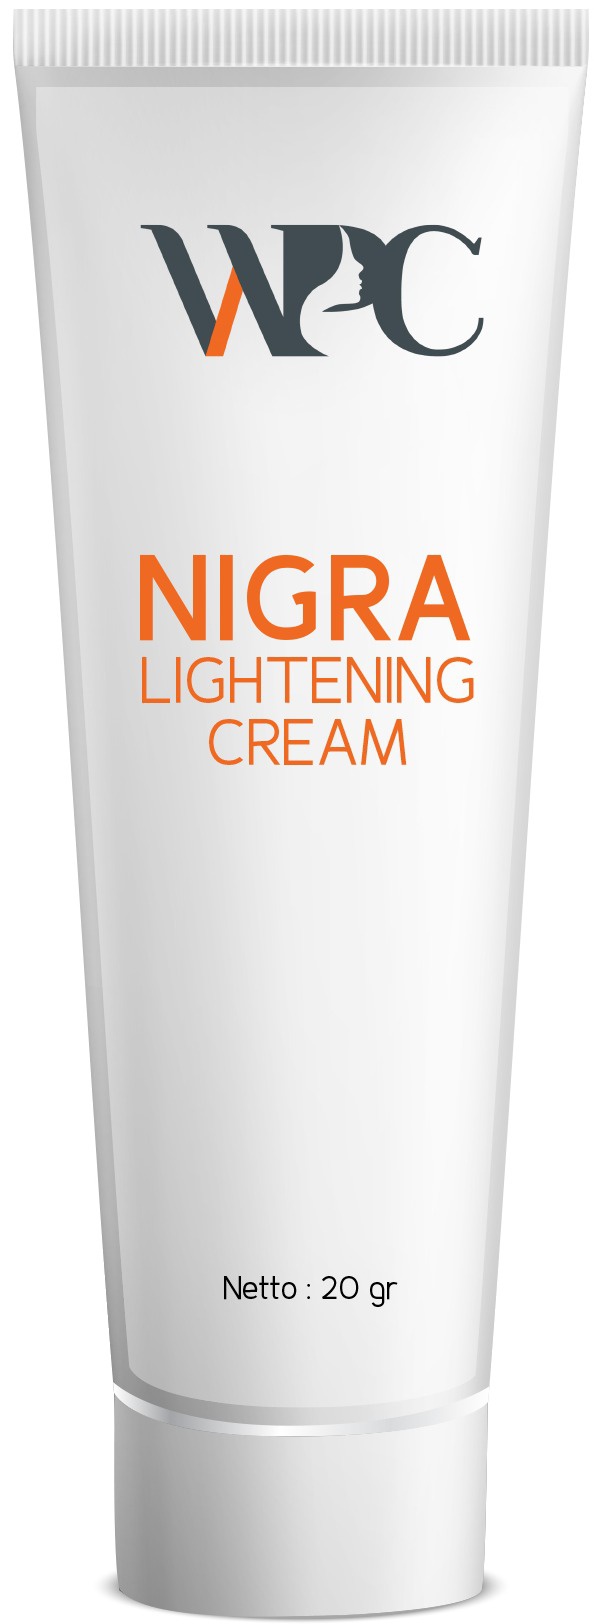 WPC Nigra Lightening Cream